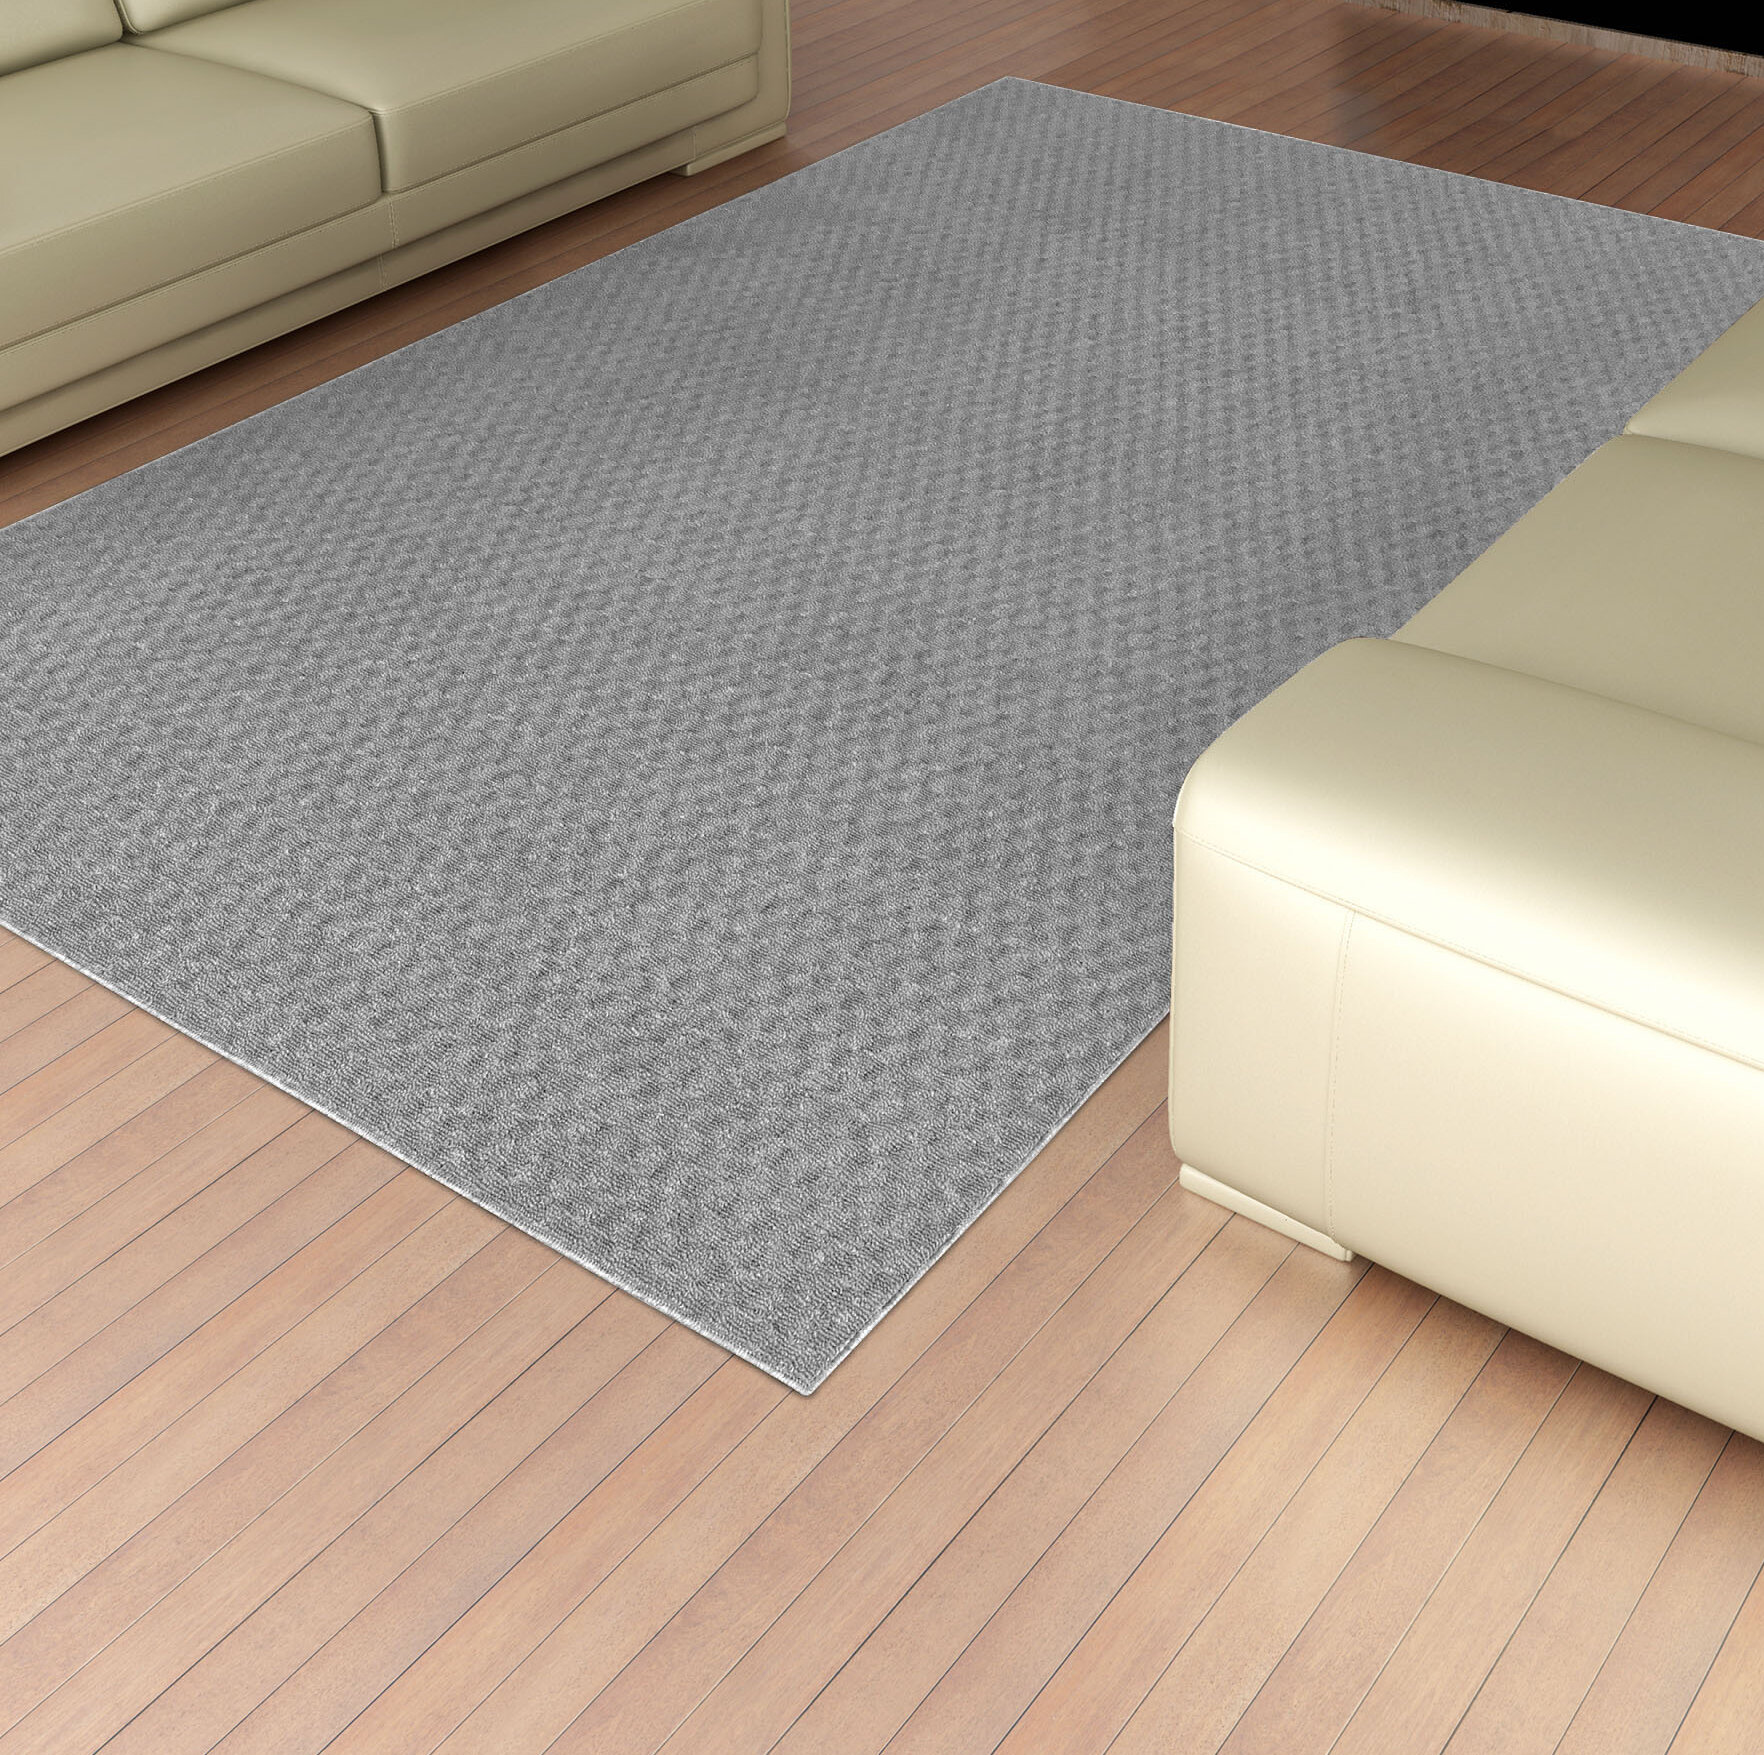 8' x 10' Area Rug Floor Carpet Tufted 100% Olefin Non Skid Resistant Rubber Back 